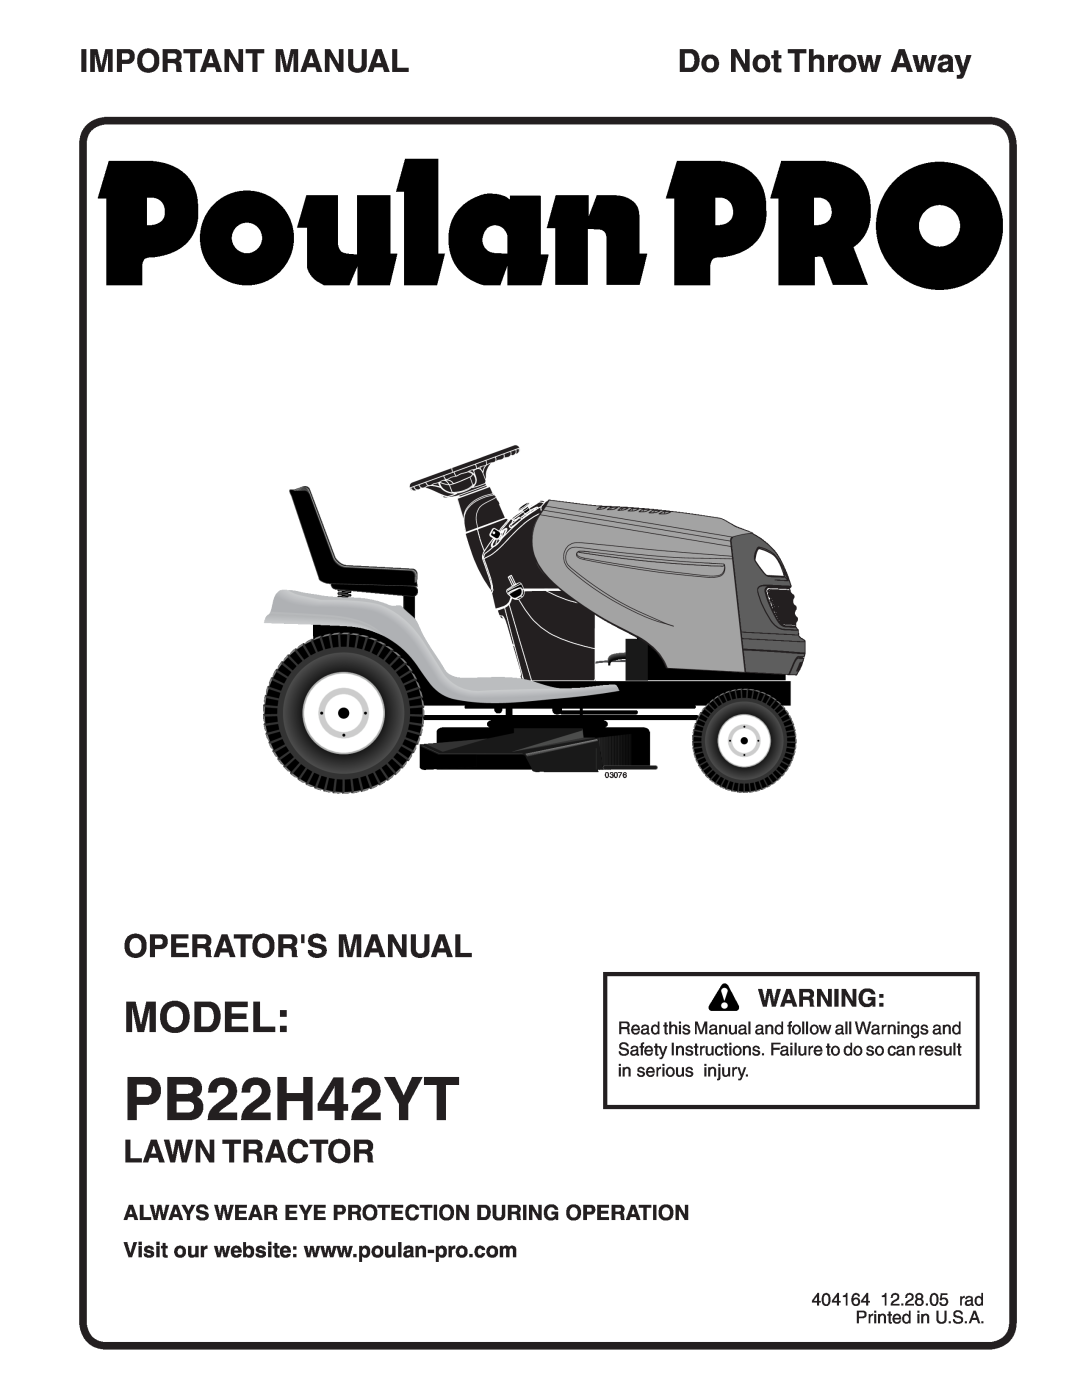 Poulan PB22H42YT manual Model, Important Manual, Operators Manual, Lawn Tractor, Do Not Throw Away, 03076 